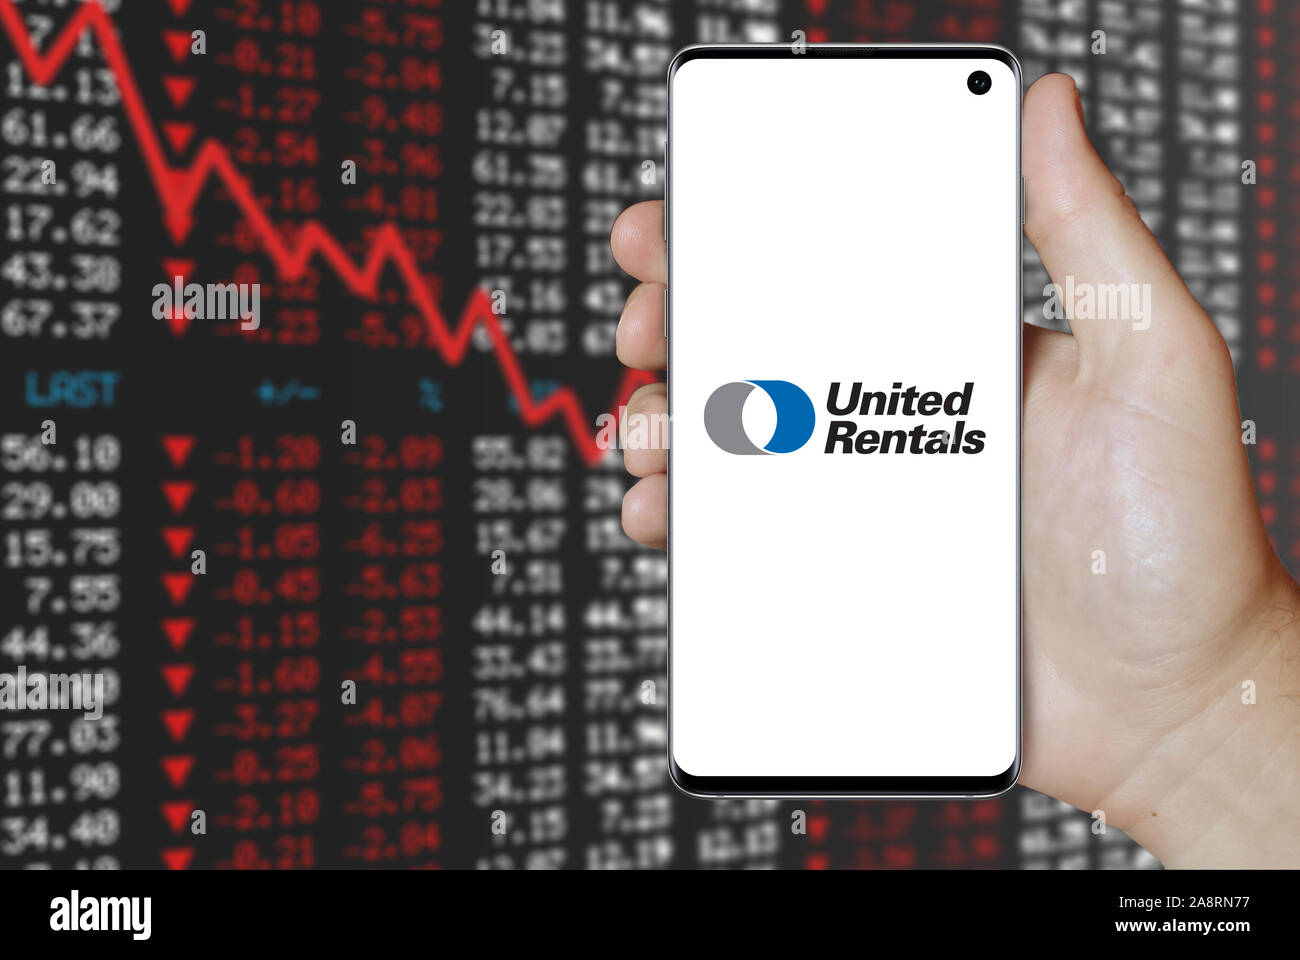 Logo of public company United Rentals, Inc. displayed on a smartphone. Negative stock market background. Credit: PIXDUCE Stock Photo